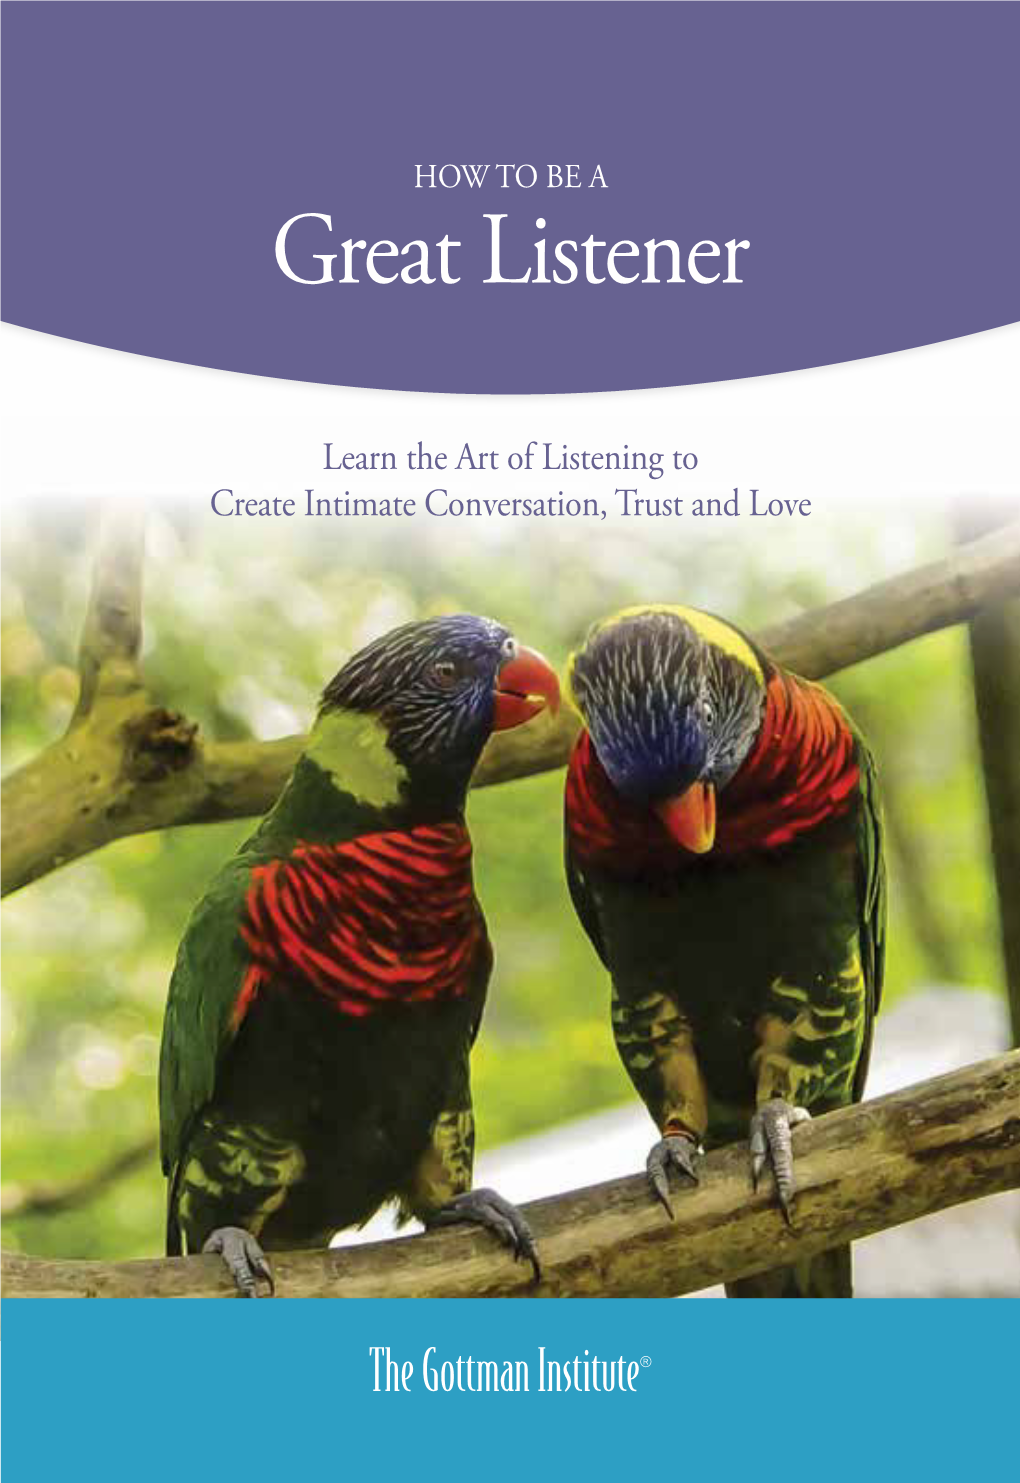 Great Listener